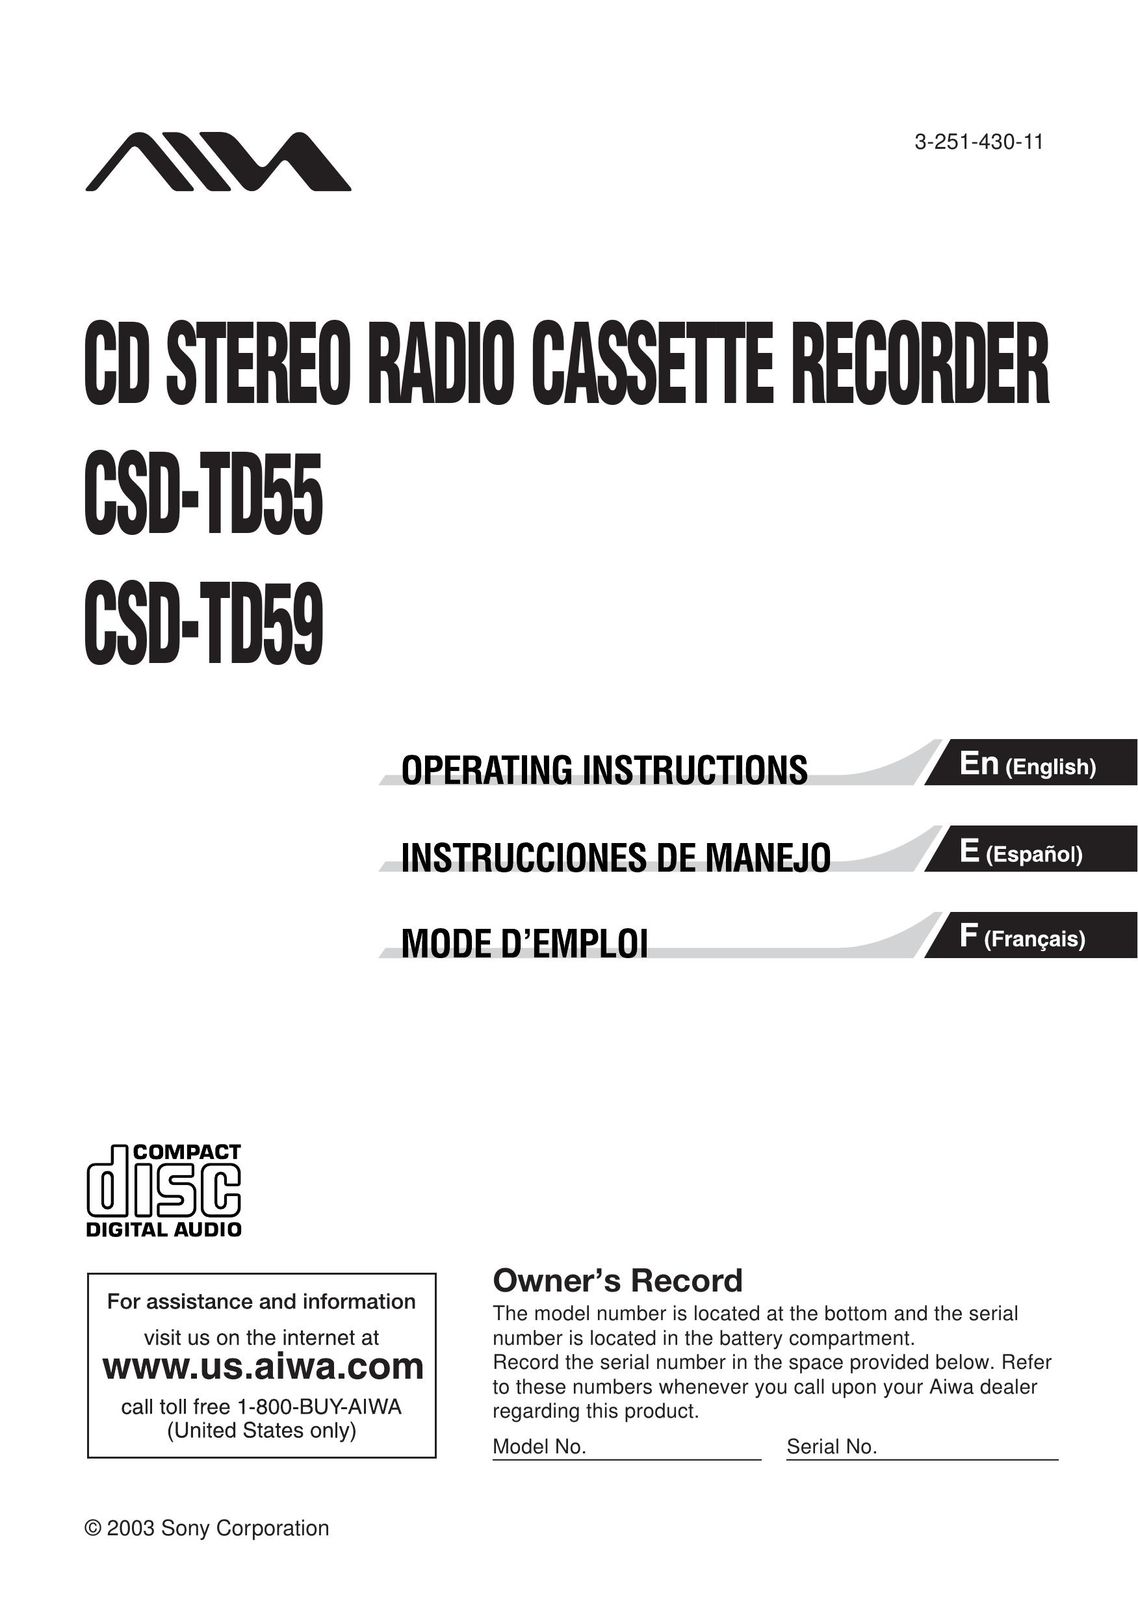 Aiwa CSD-TD55 Microcassette Recorder User Manual